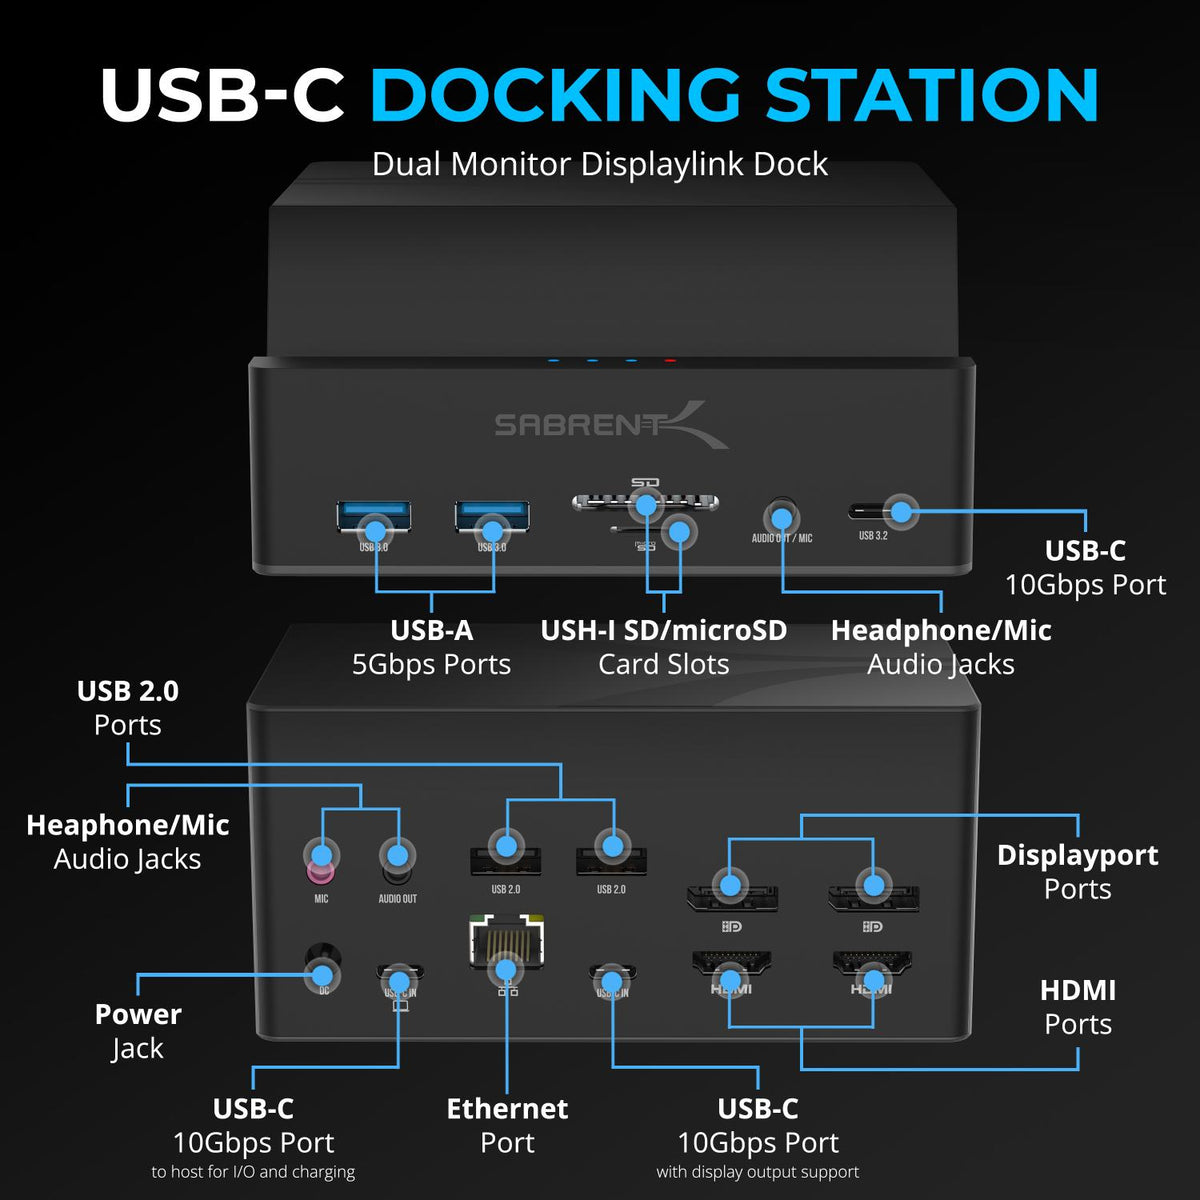 USB-C Universal Docking Station, Dual Monitor Displaylink Dock